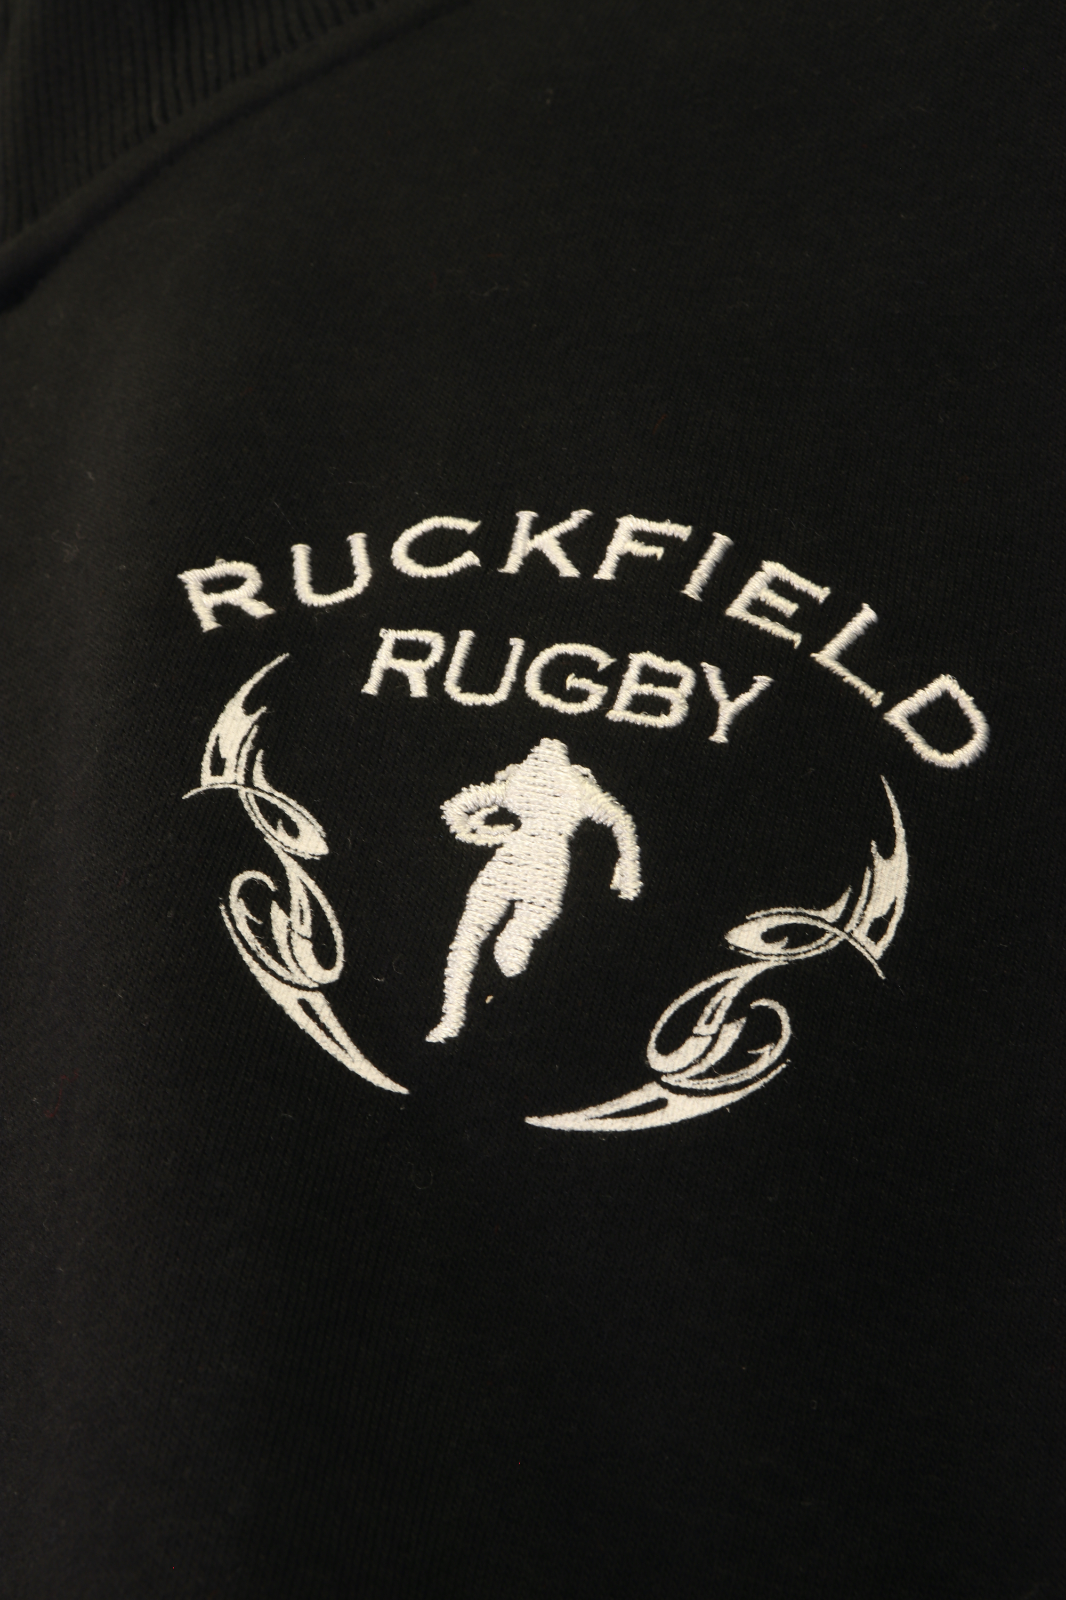 Ruckfield Rugby Men's Sweater Black Mockneck Long Sleeve (S02)